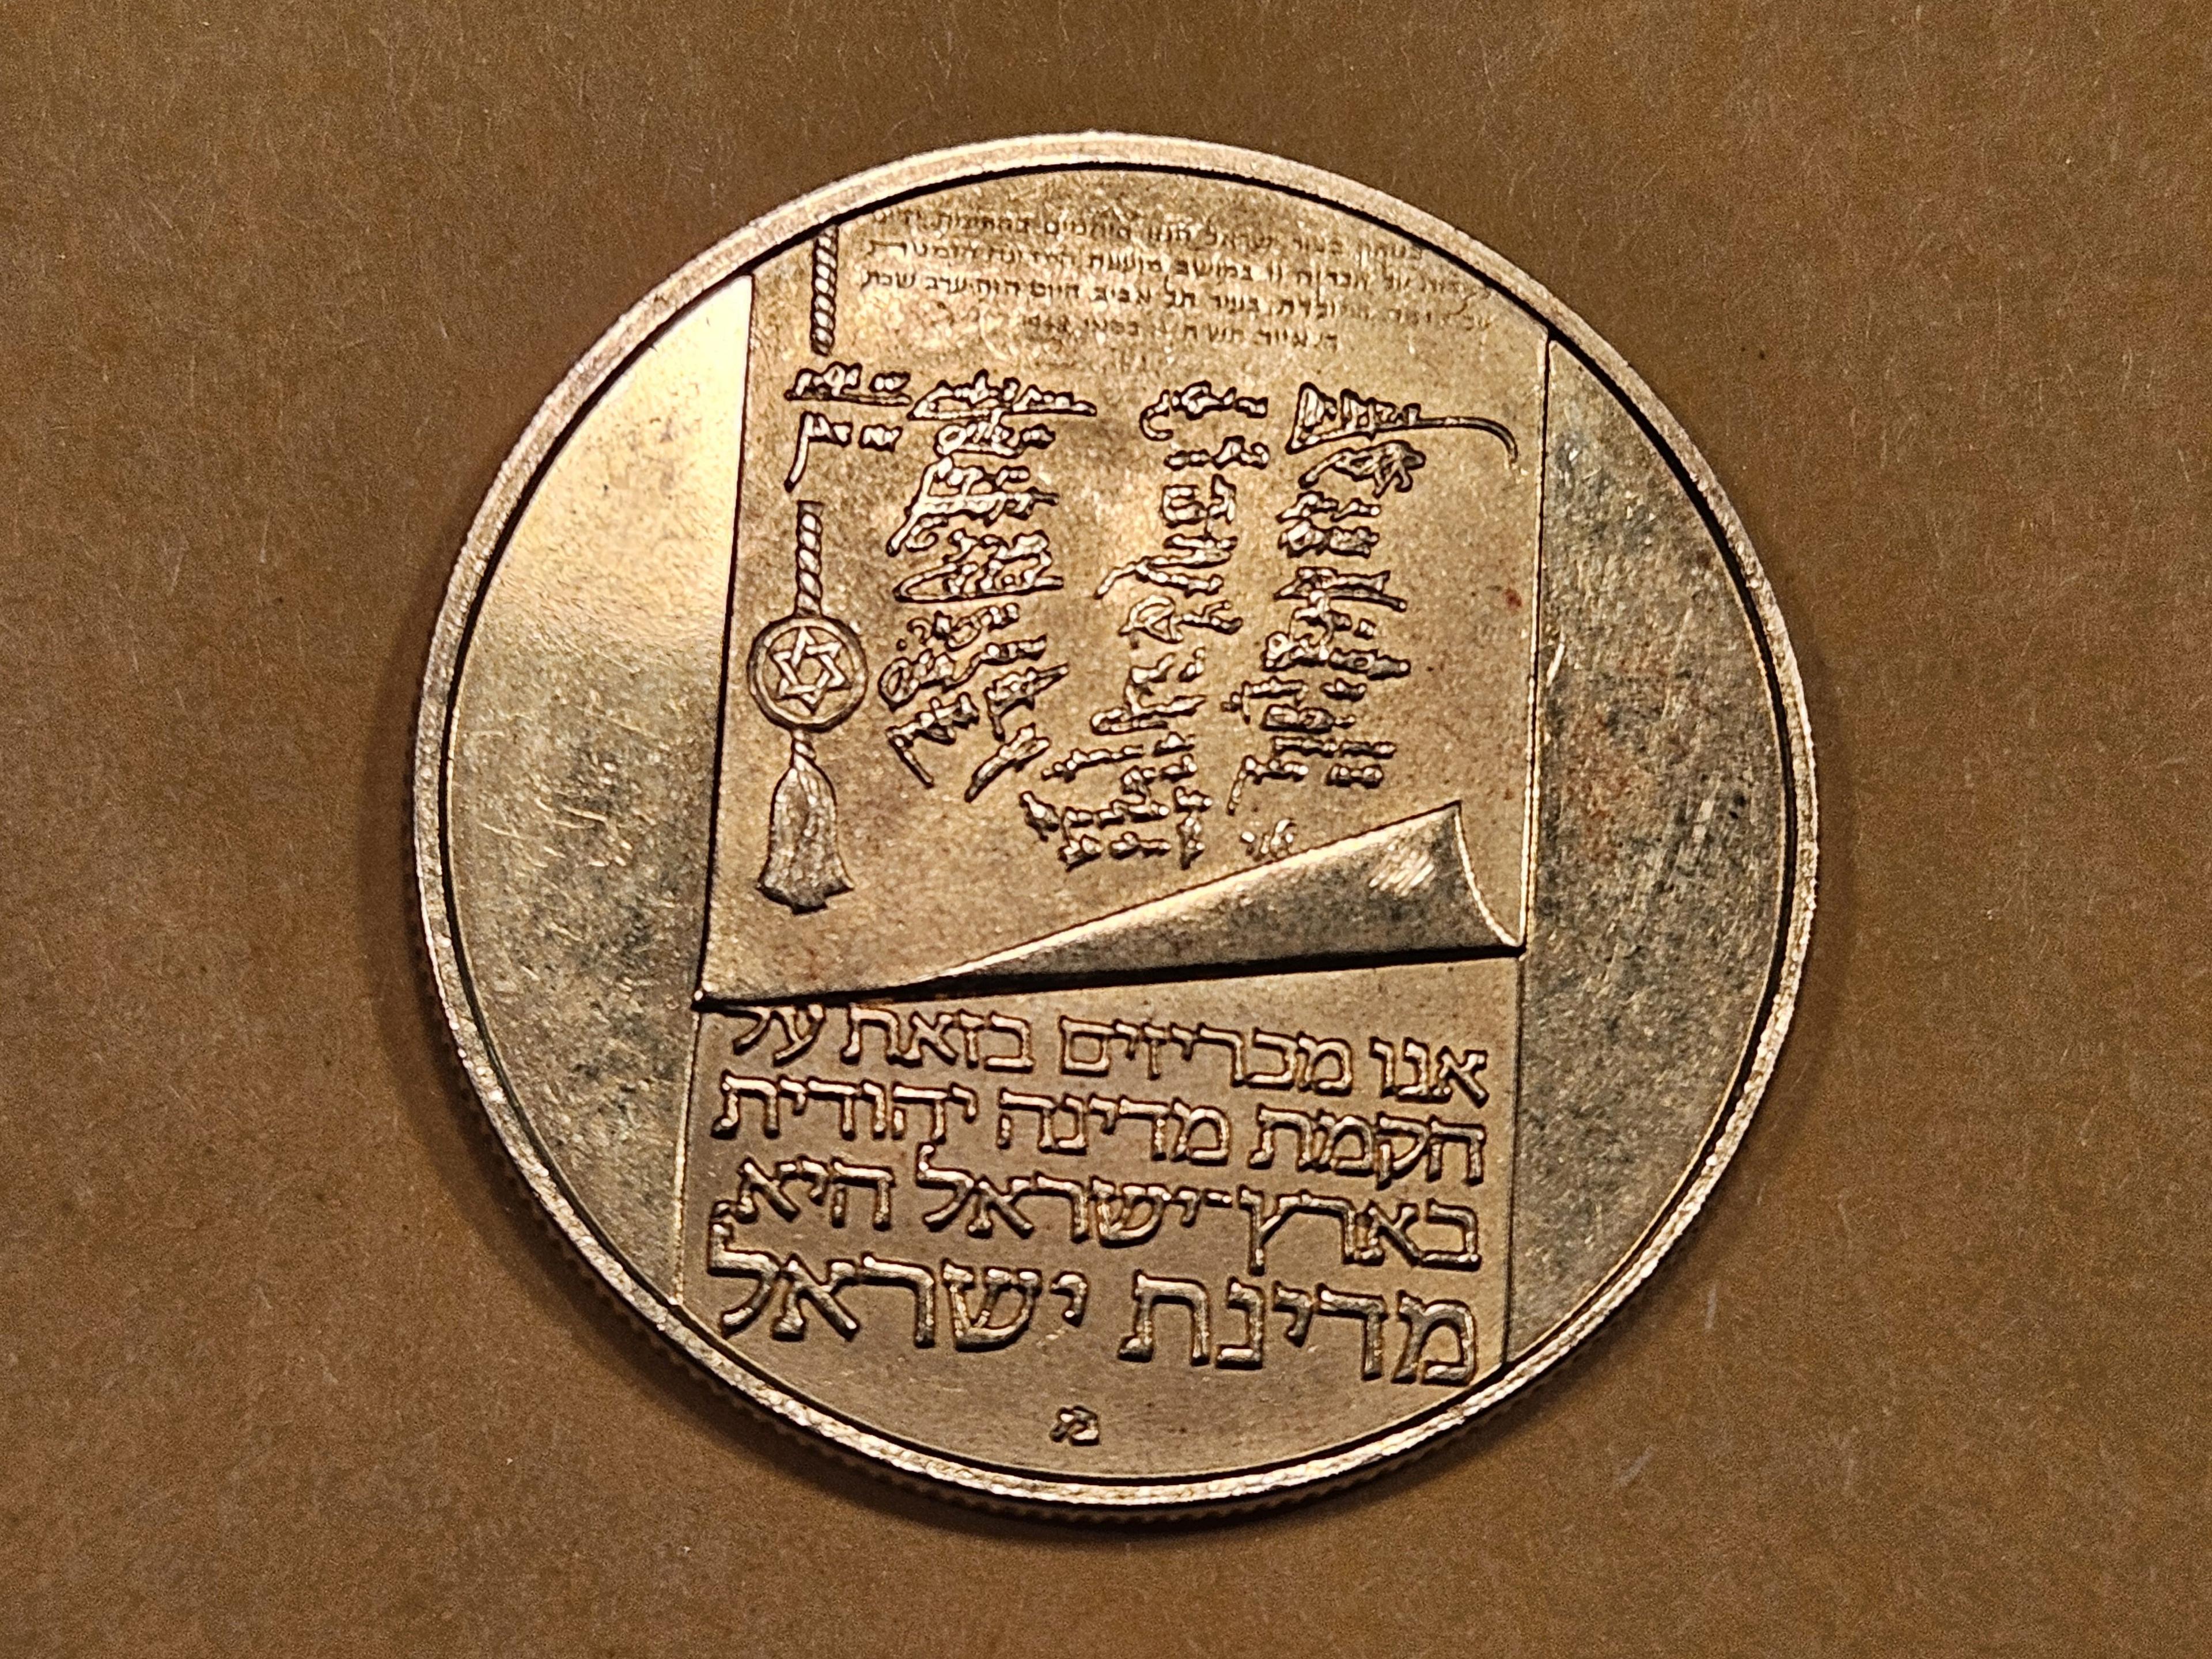 GOLD! 1973 Proof Gold Israel 100 lirot